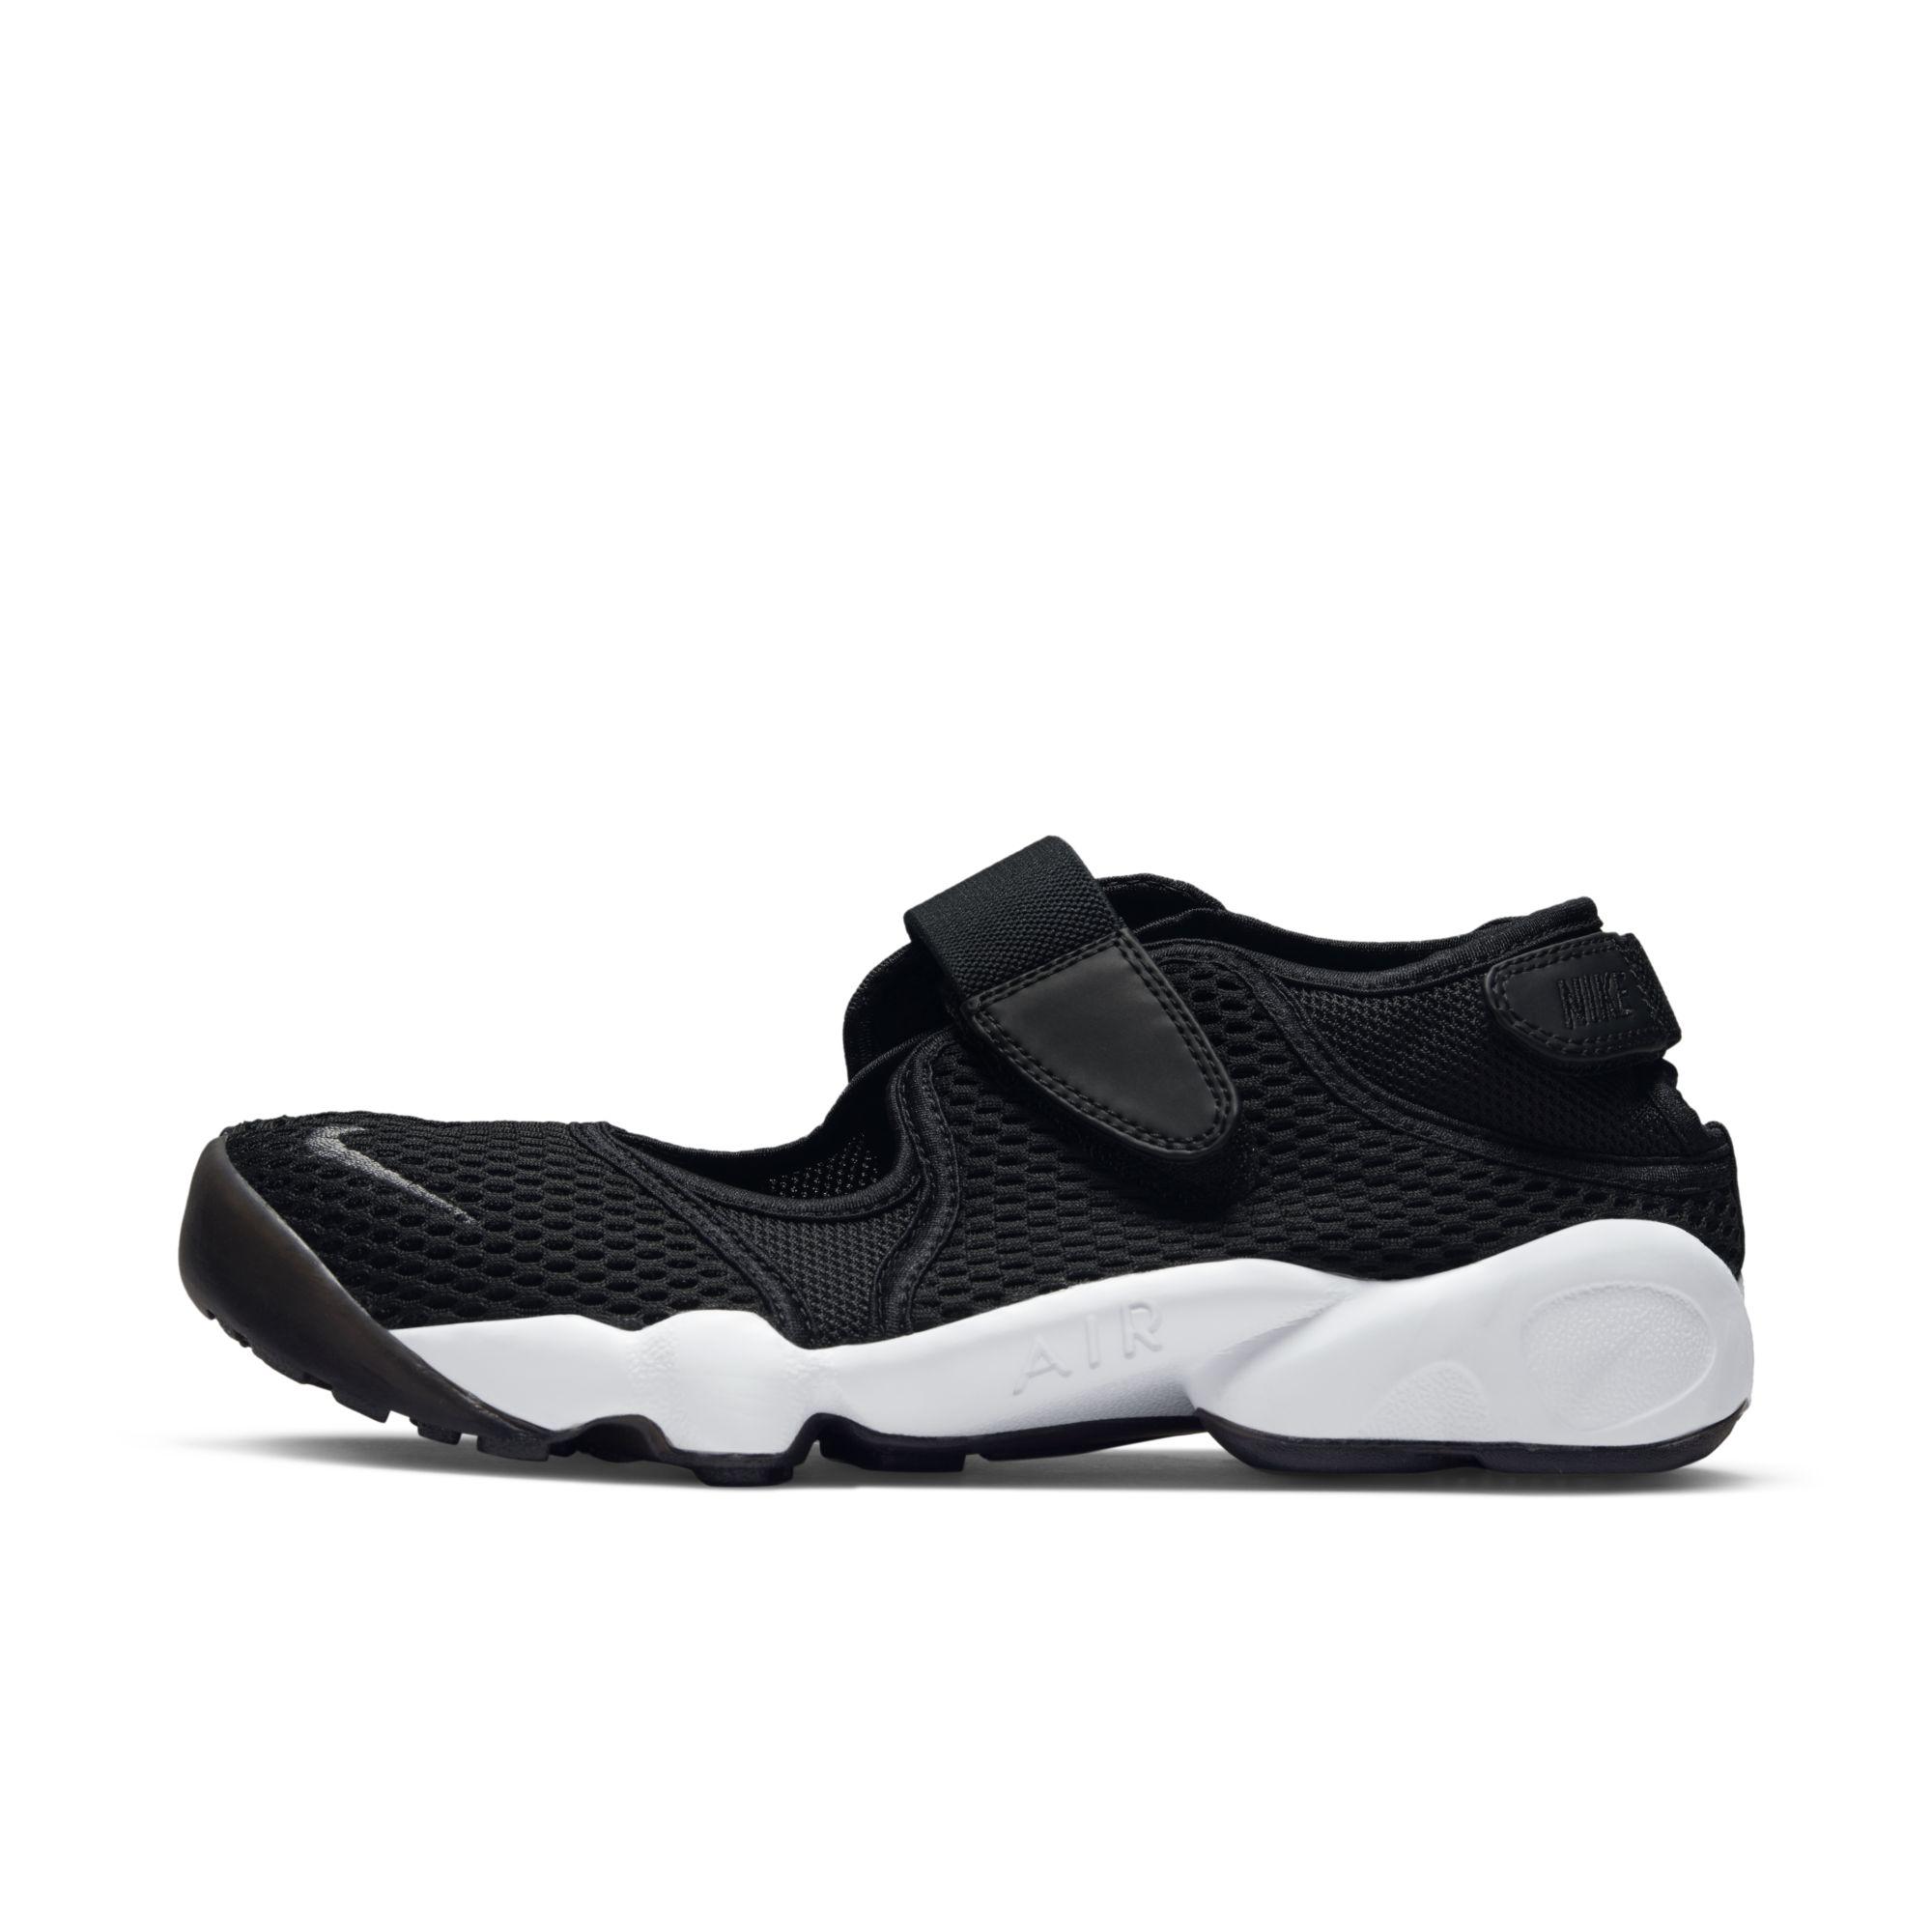 Nike Air Rift Breathe Shoes in Black | Lyst